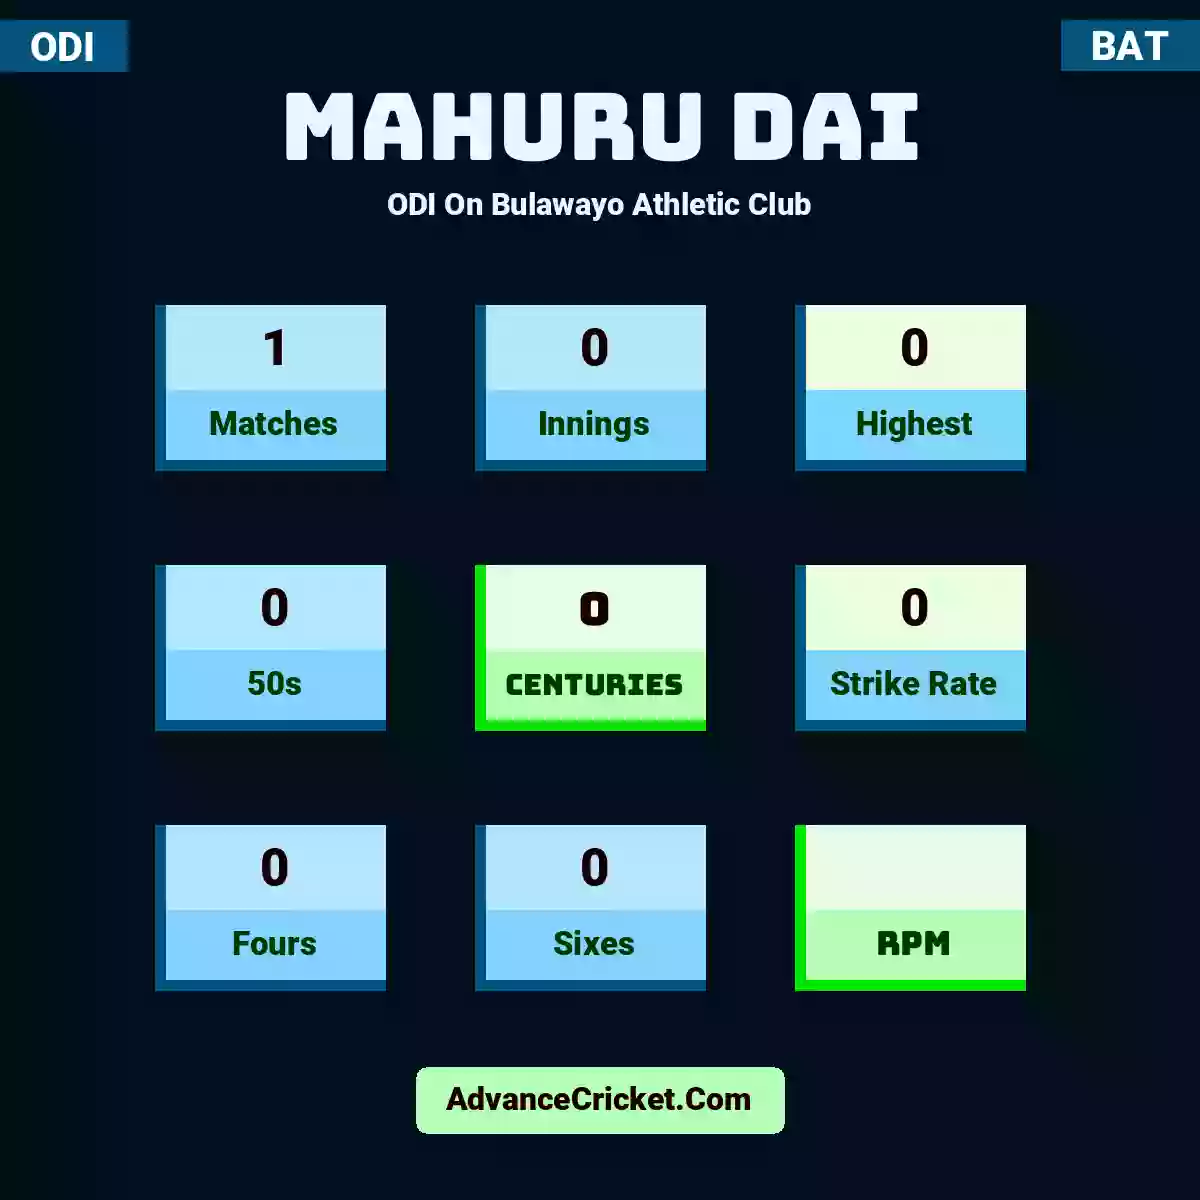 Mahuru Dai ODI  On Bulawayo Athletic Club, Mahuru Dai played 1 matches, scored 0 runs as highest, 0 half-centuries, and 0 centuries, with a strike rate of 0. M.Dai hit 0 fours and 0 sixes.